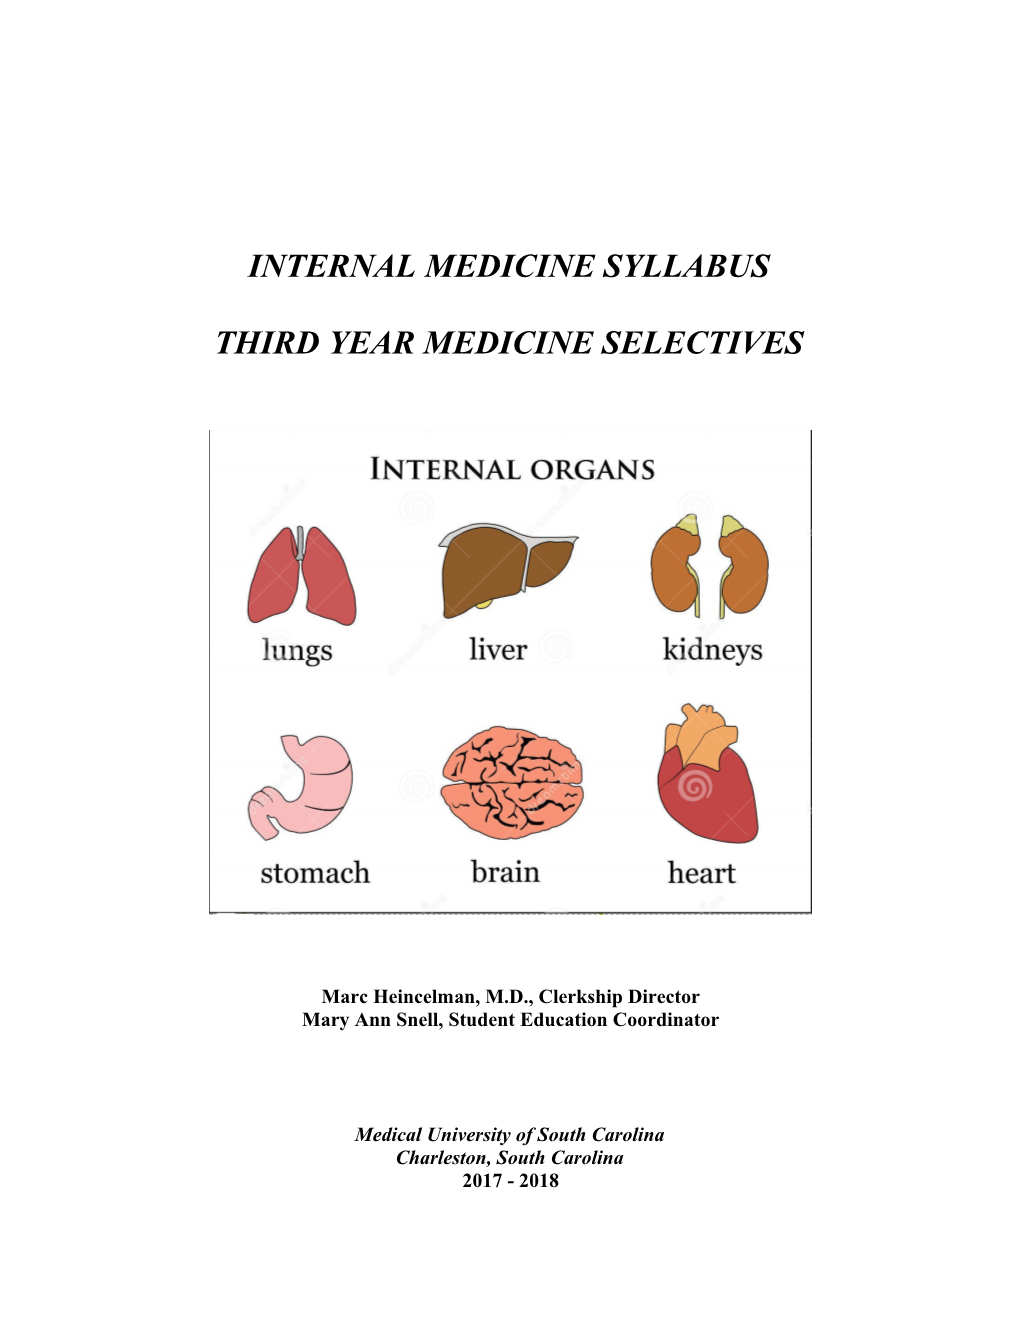 Internal Medicine Syllabus